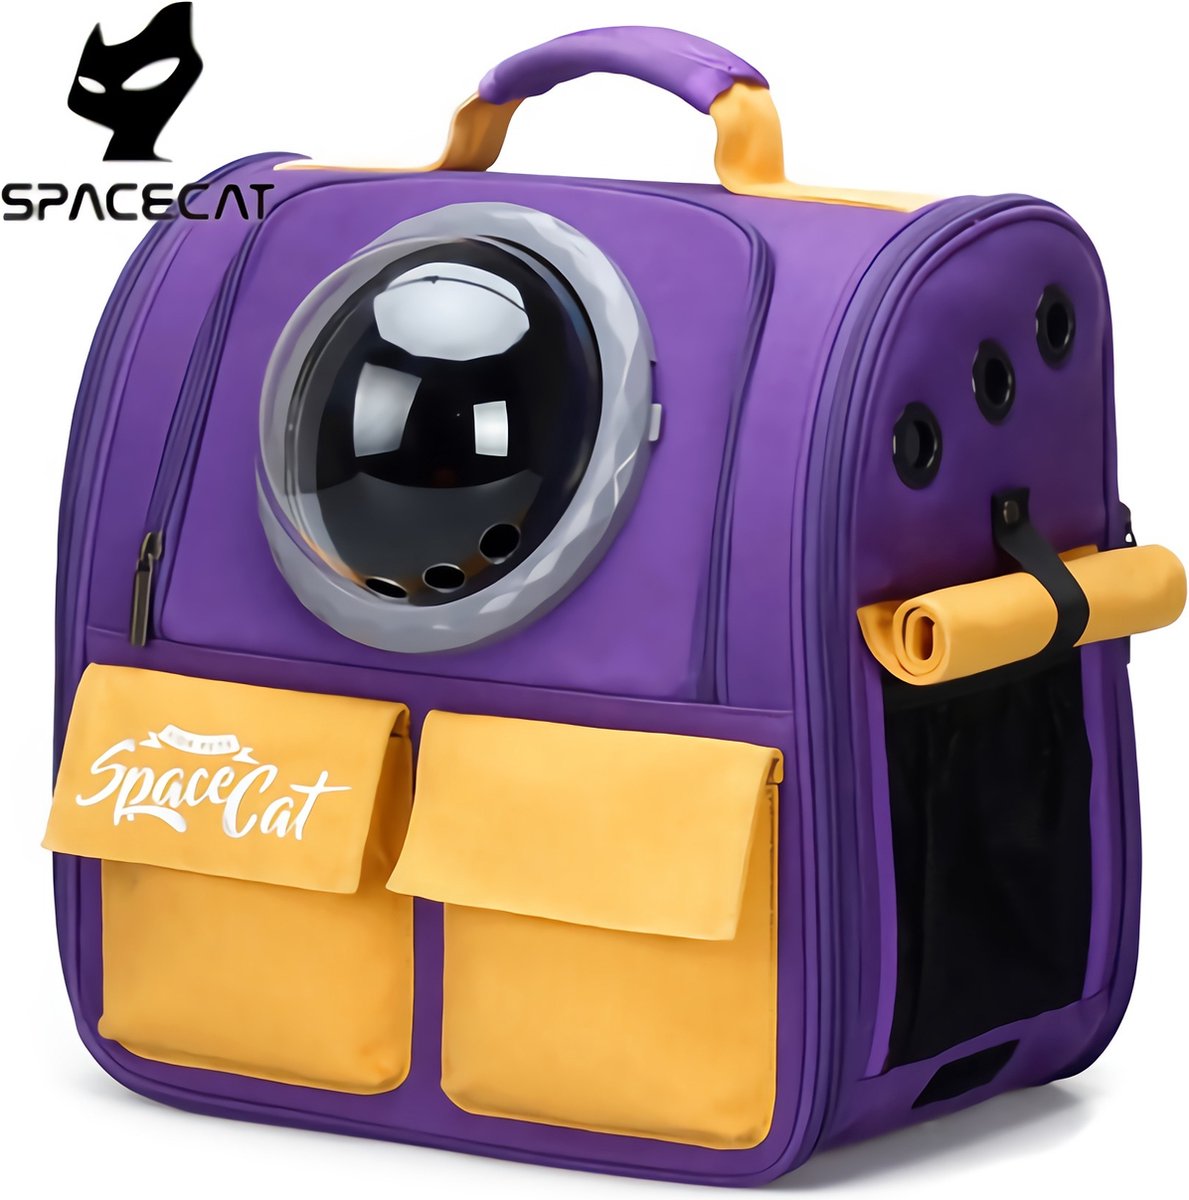 Space Cat - Rugzak - Draagtas - Reistas - Carrier - Transporttas - Huisdier - Katten - Kleine Honden - Paars - Space-Cat